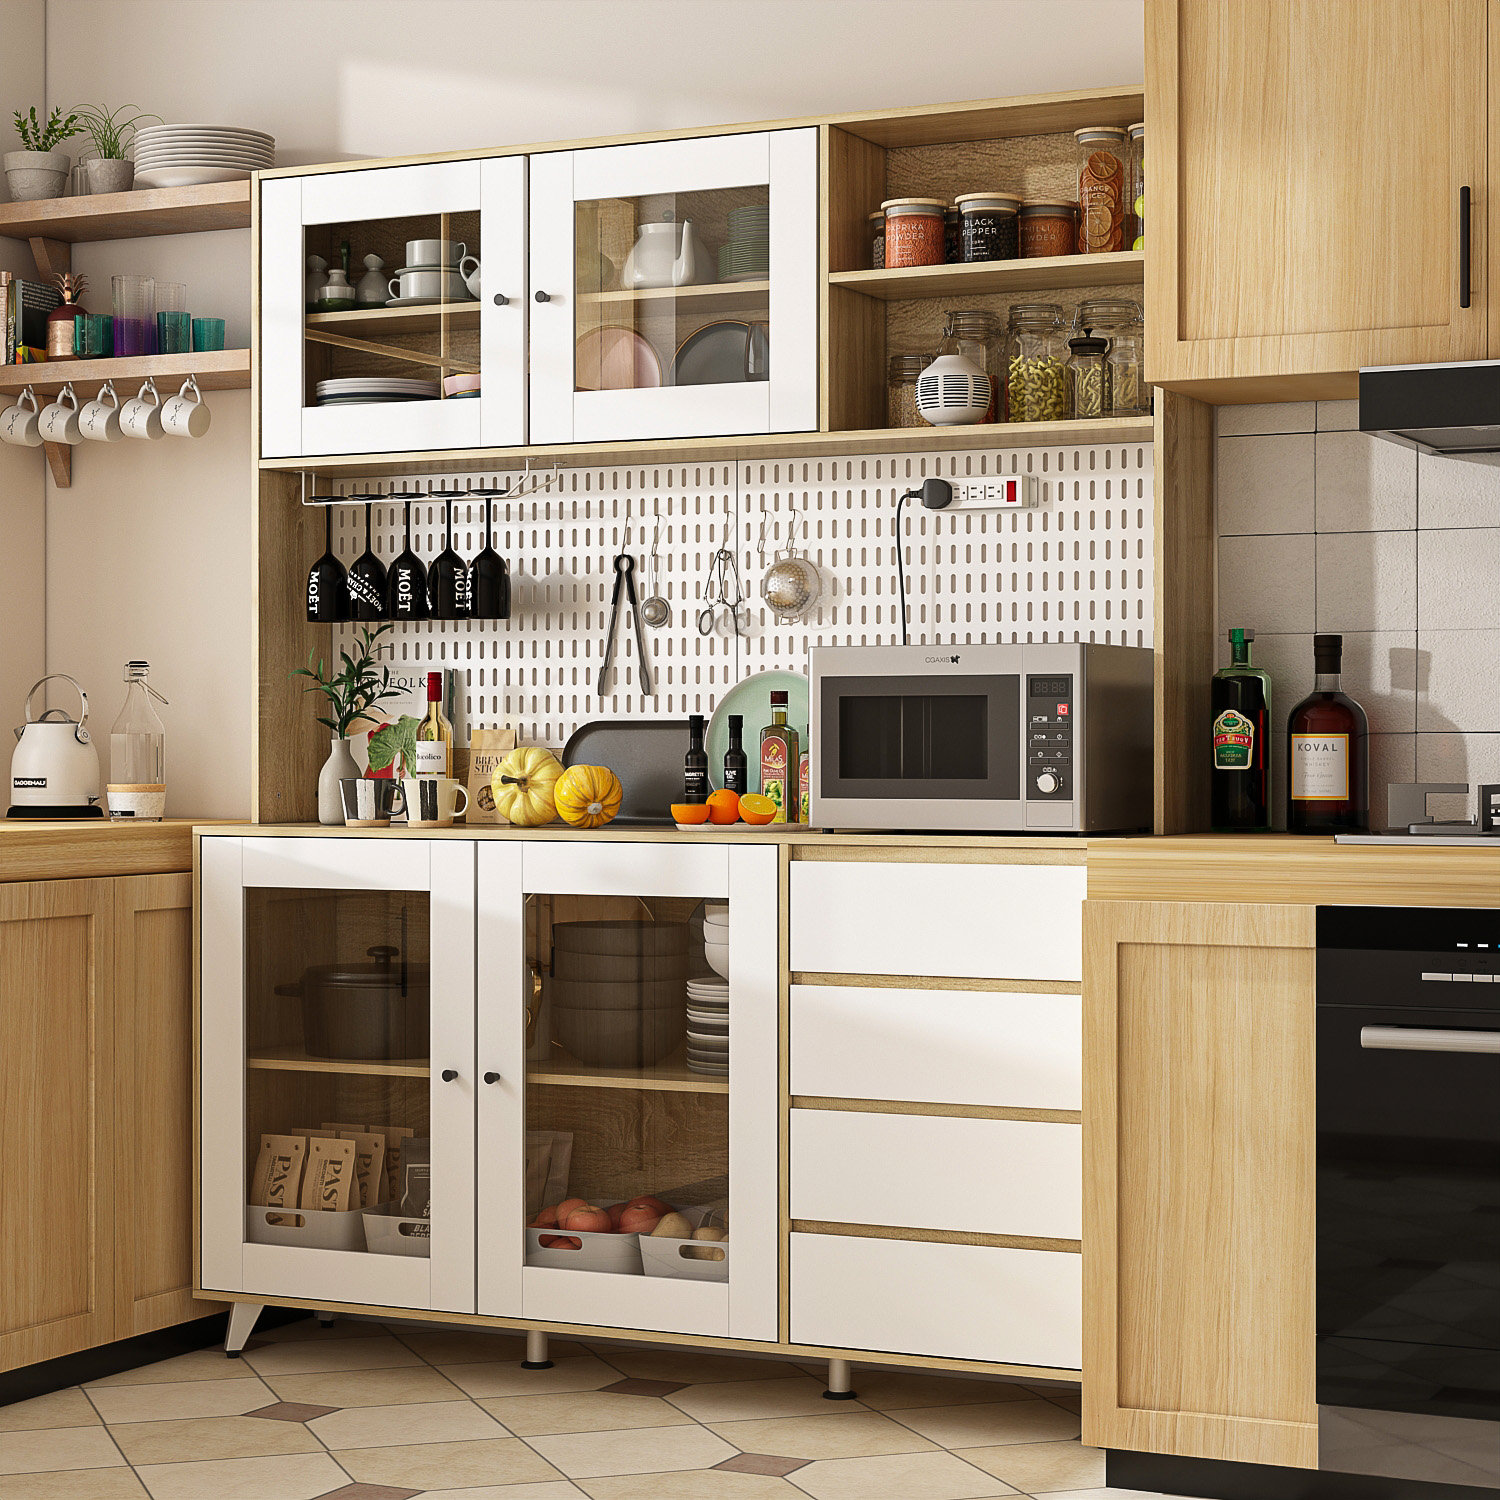 13 Genius Dorm Kitchen Ideas with Mini Fridge and Microwave